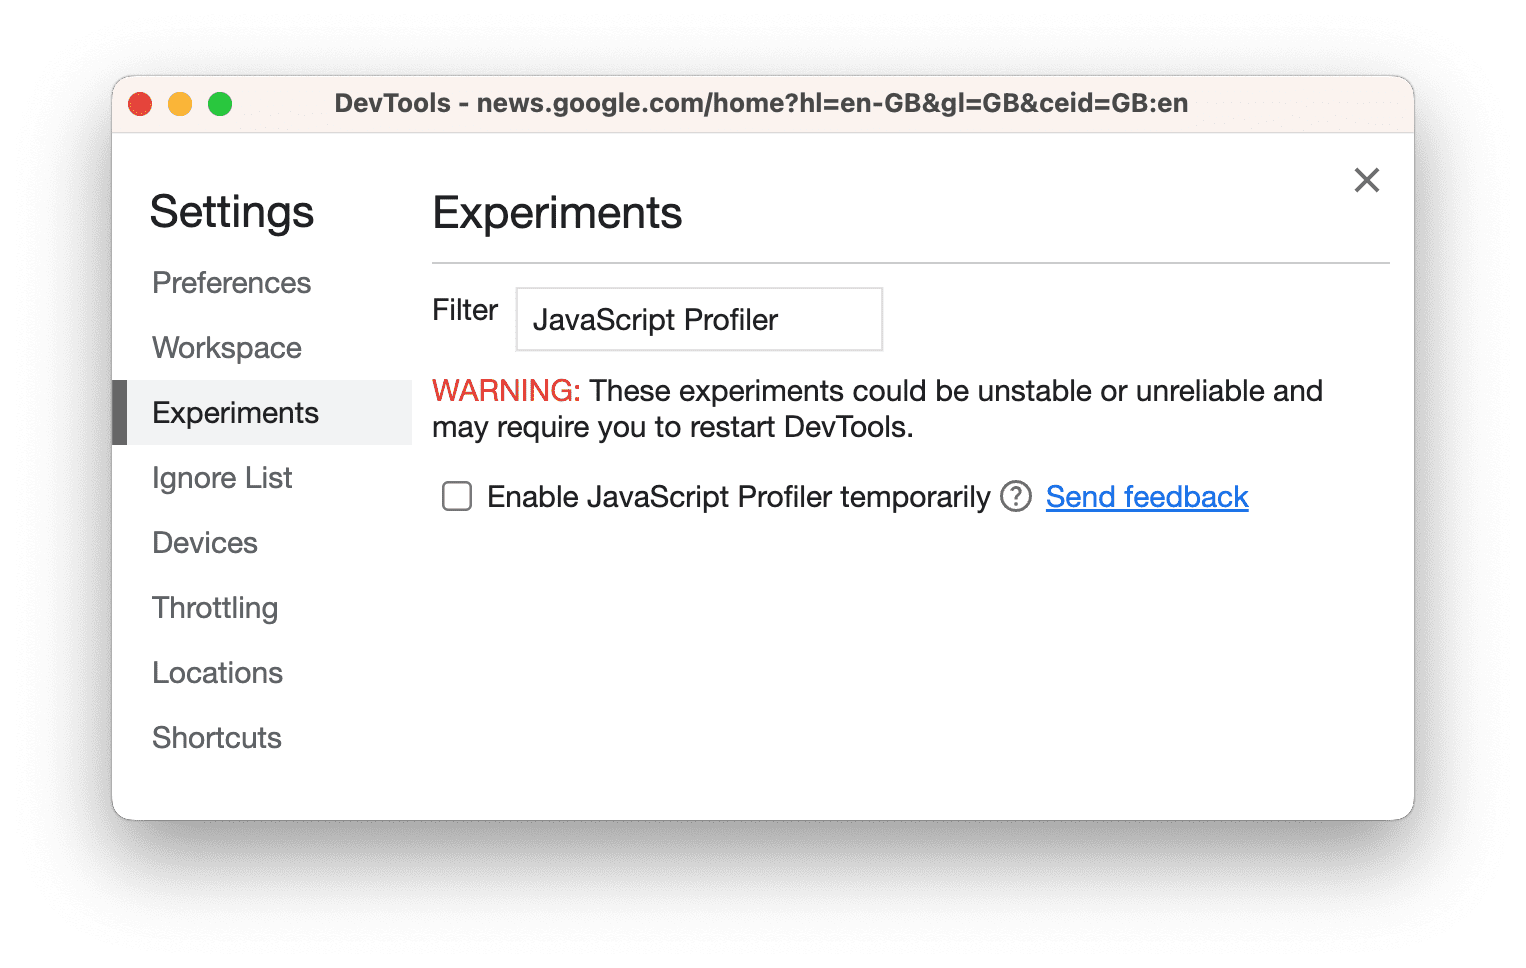 JavaScript profiler checkbox in Settings then Experiments.